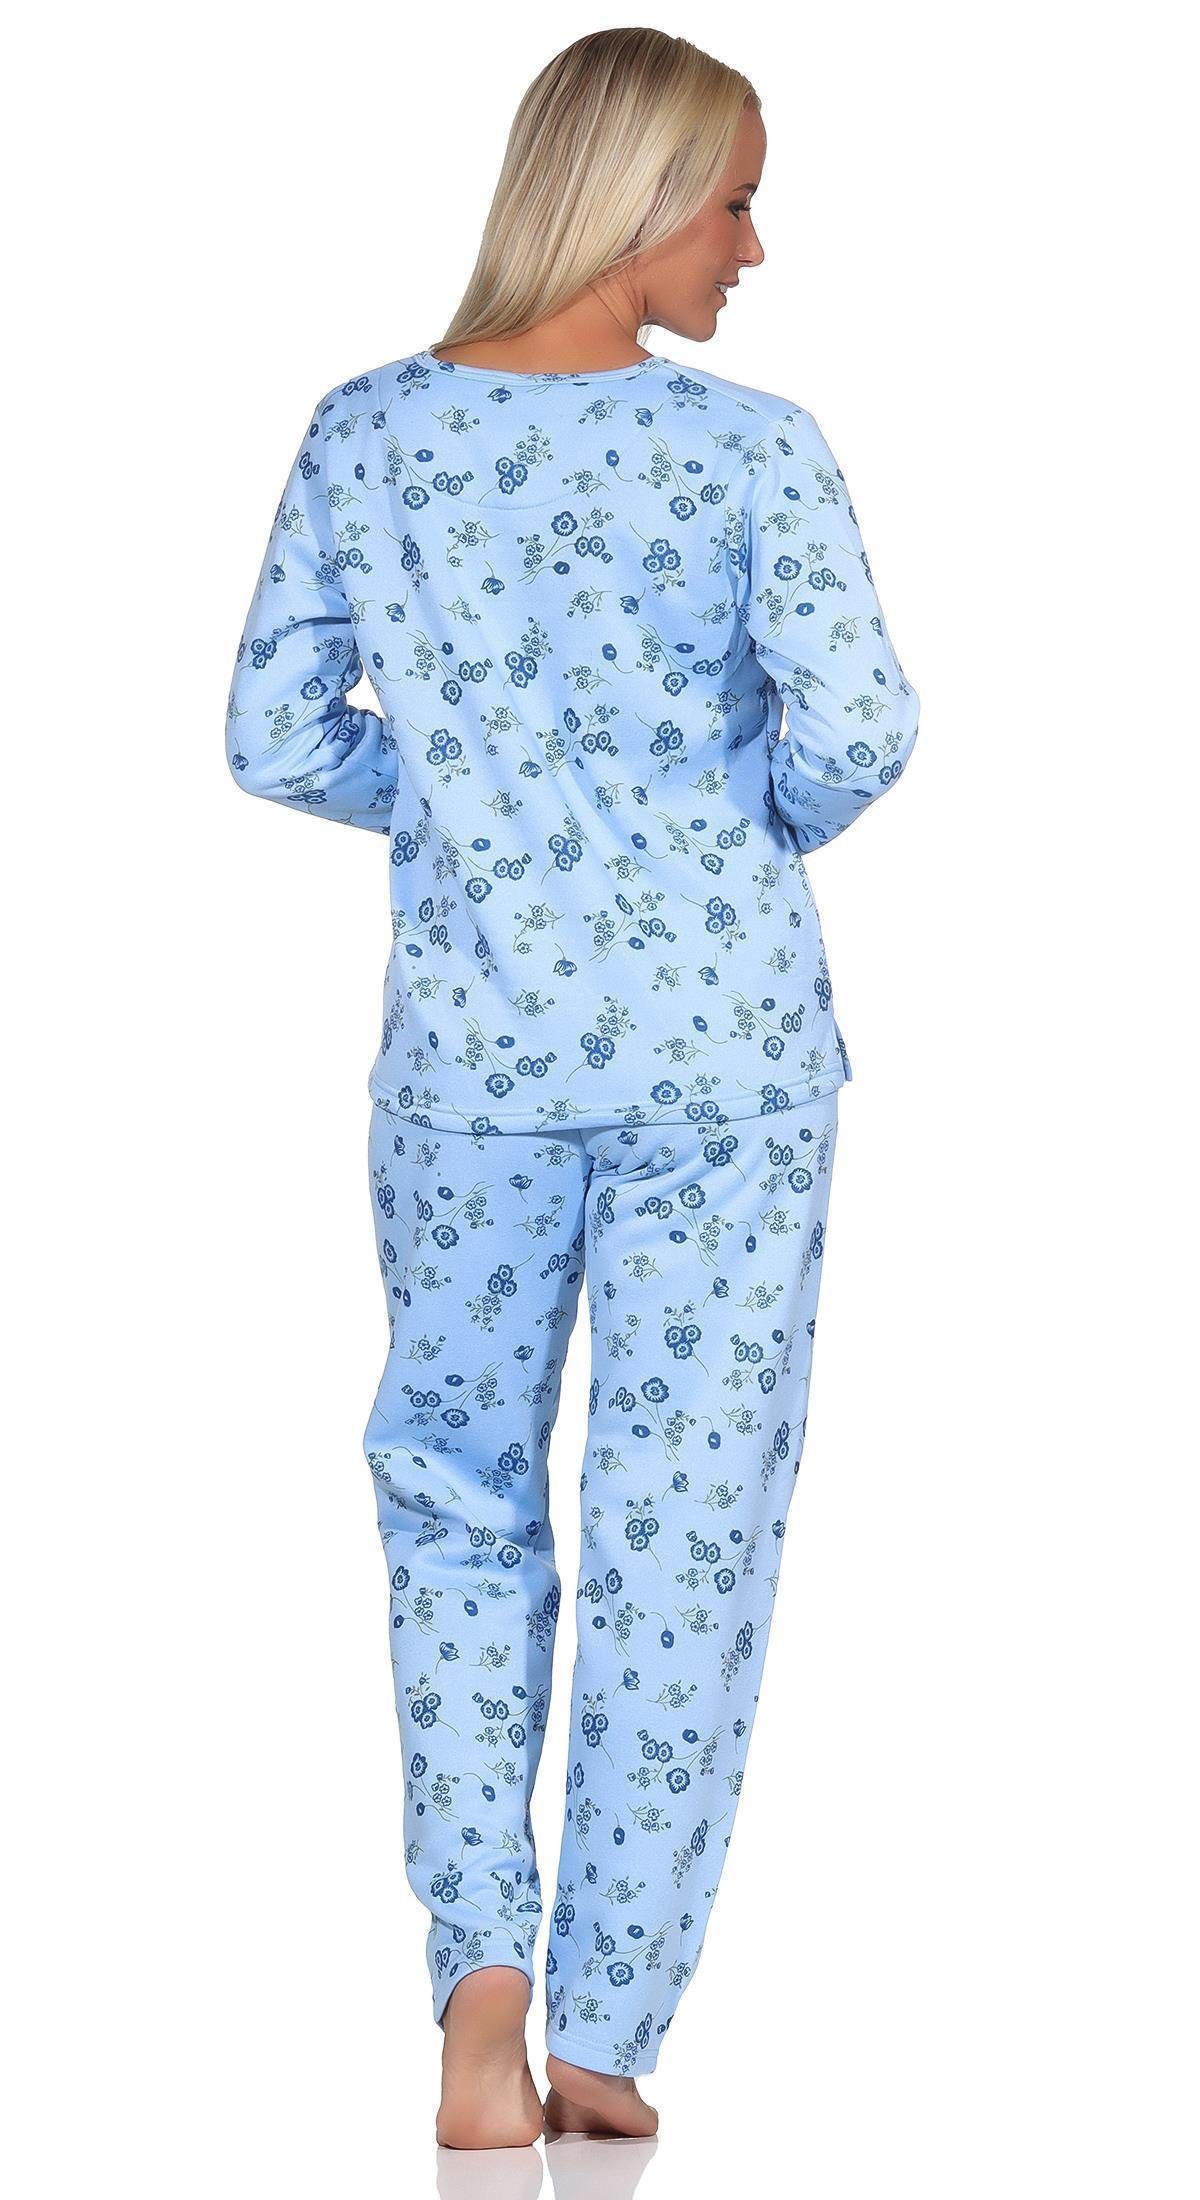 EloModa Pyjama Damen M L Thermo 2XL XL Winter (2 Gr. Blau tlg) zweiteiliger Pyjama Schlafanzug